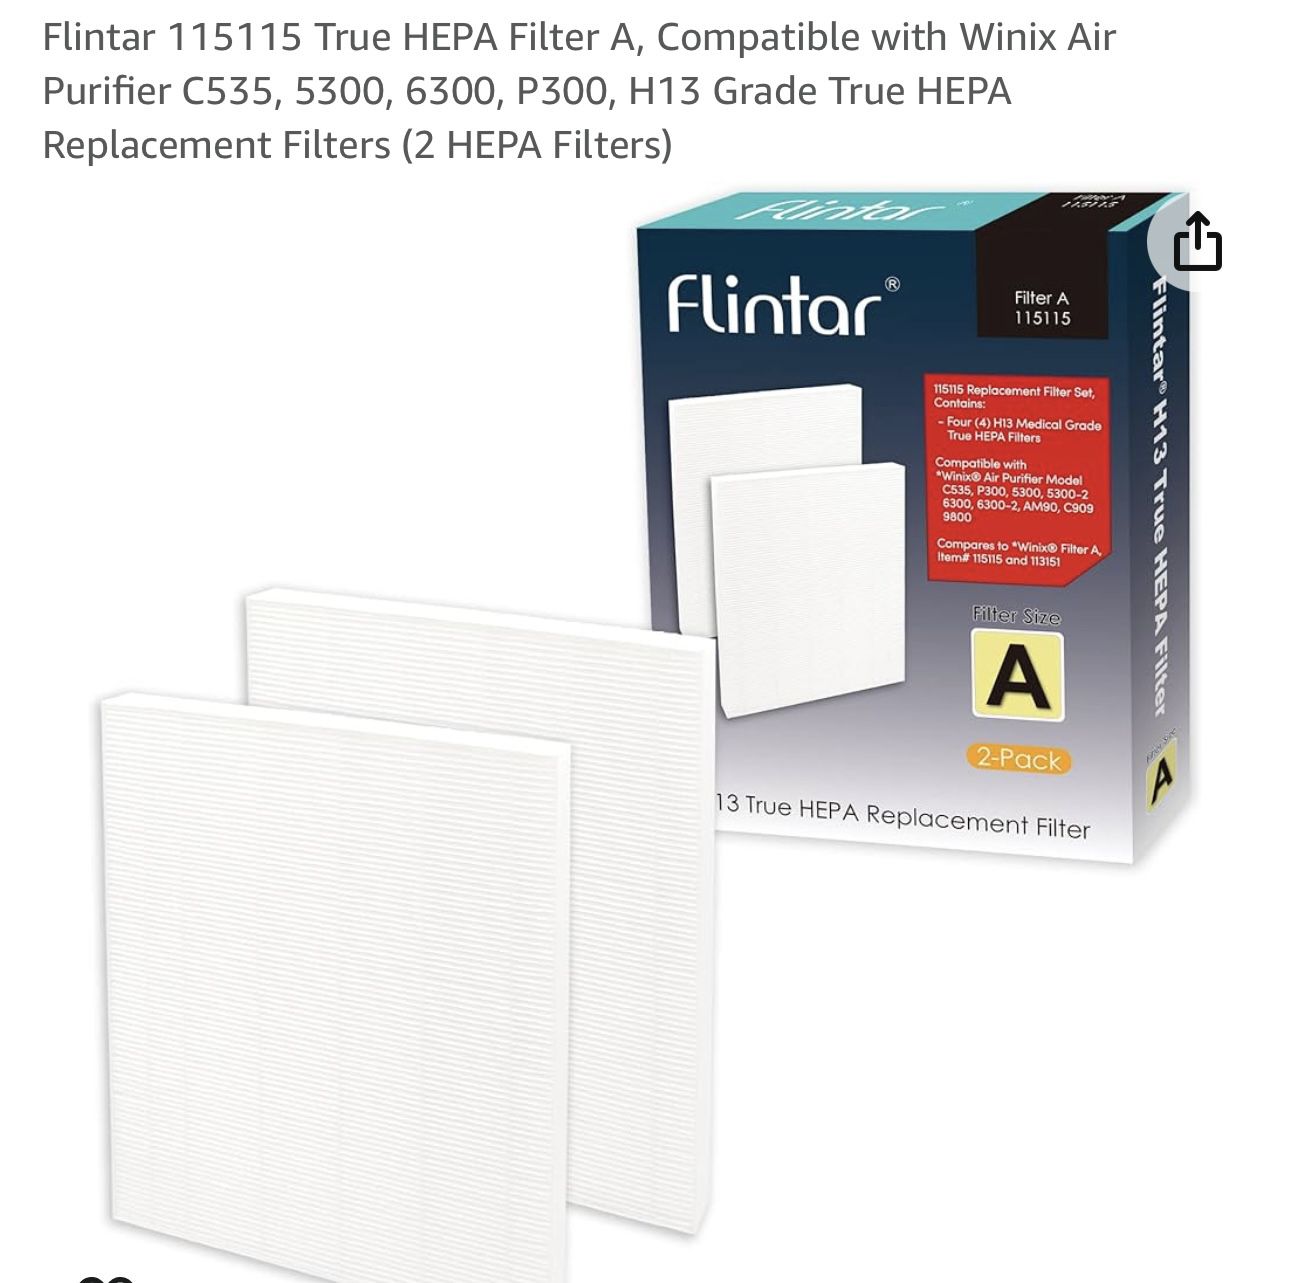 Flintar 115115 True HEPA Filter A, Compatible with Winix Air Purifier C535, 5300, 6300, P300, H13 Grade True HEPA Replacement Filters (2 HEPA Filters)